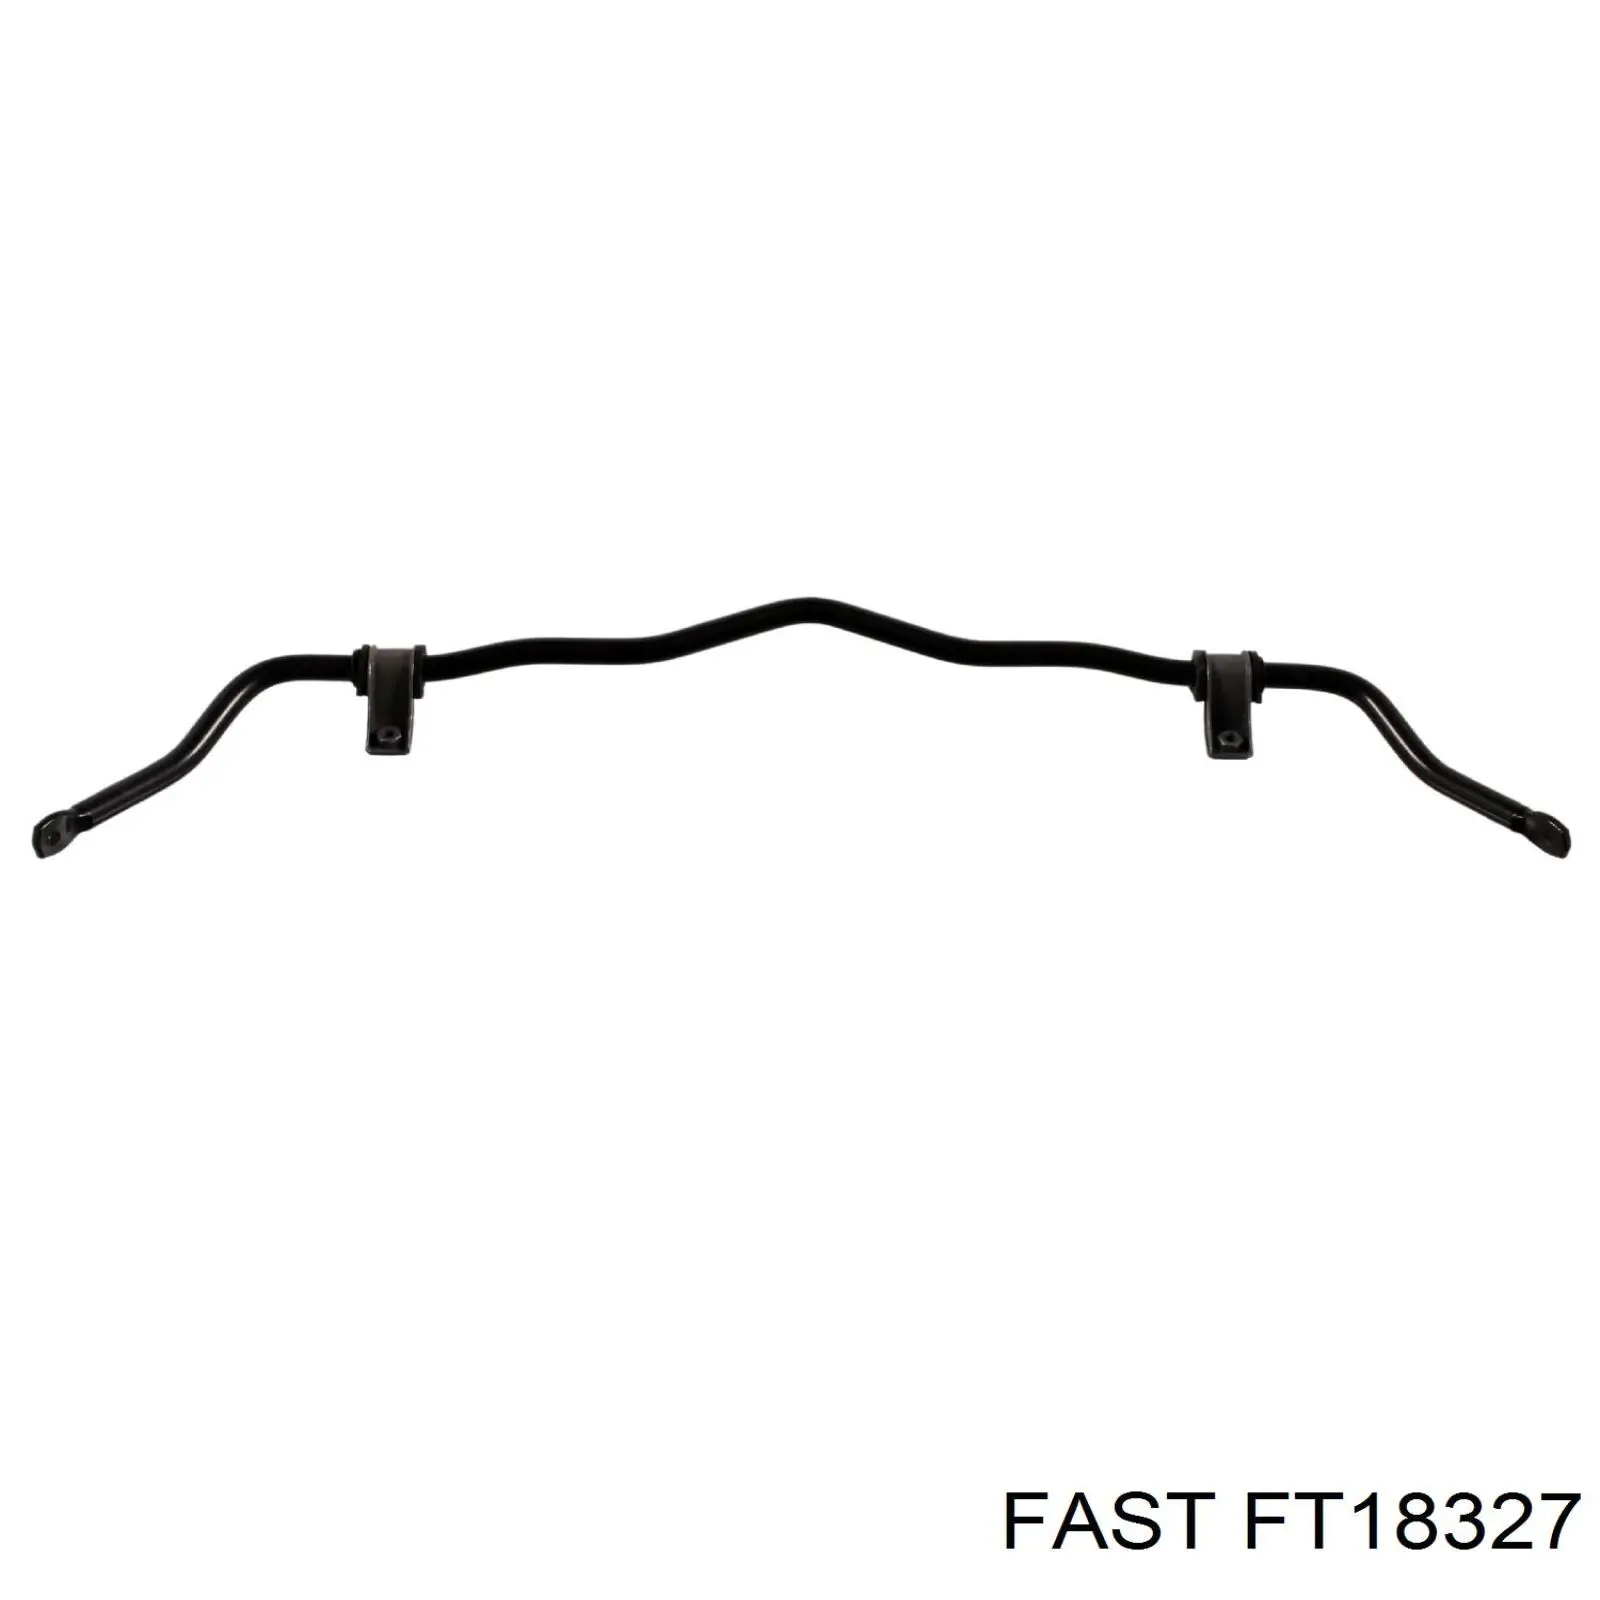 FT18327 Fast casquillo de barra estabilizadora delantera